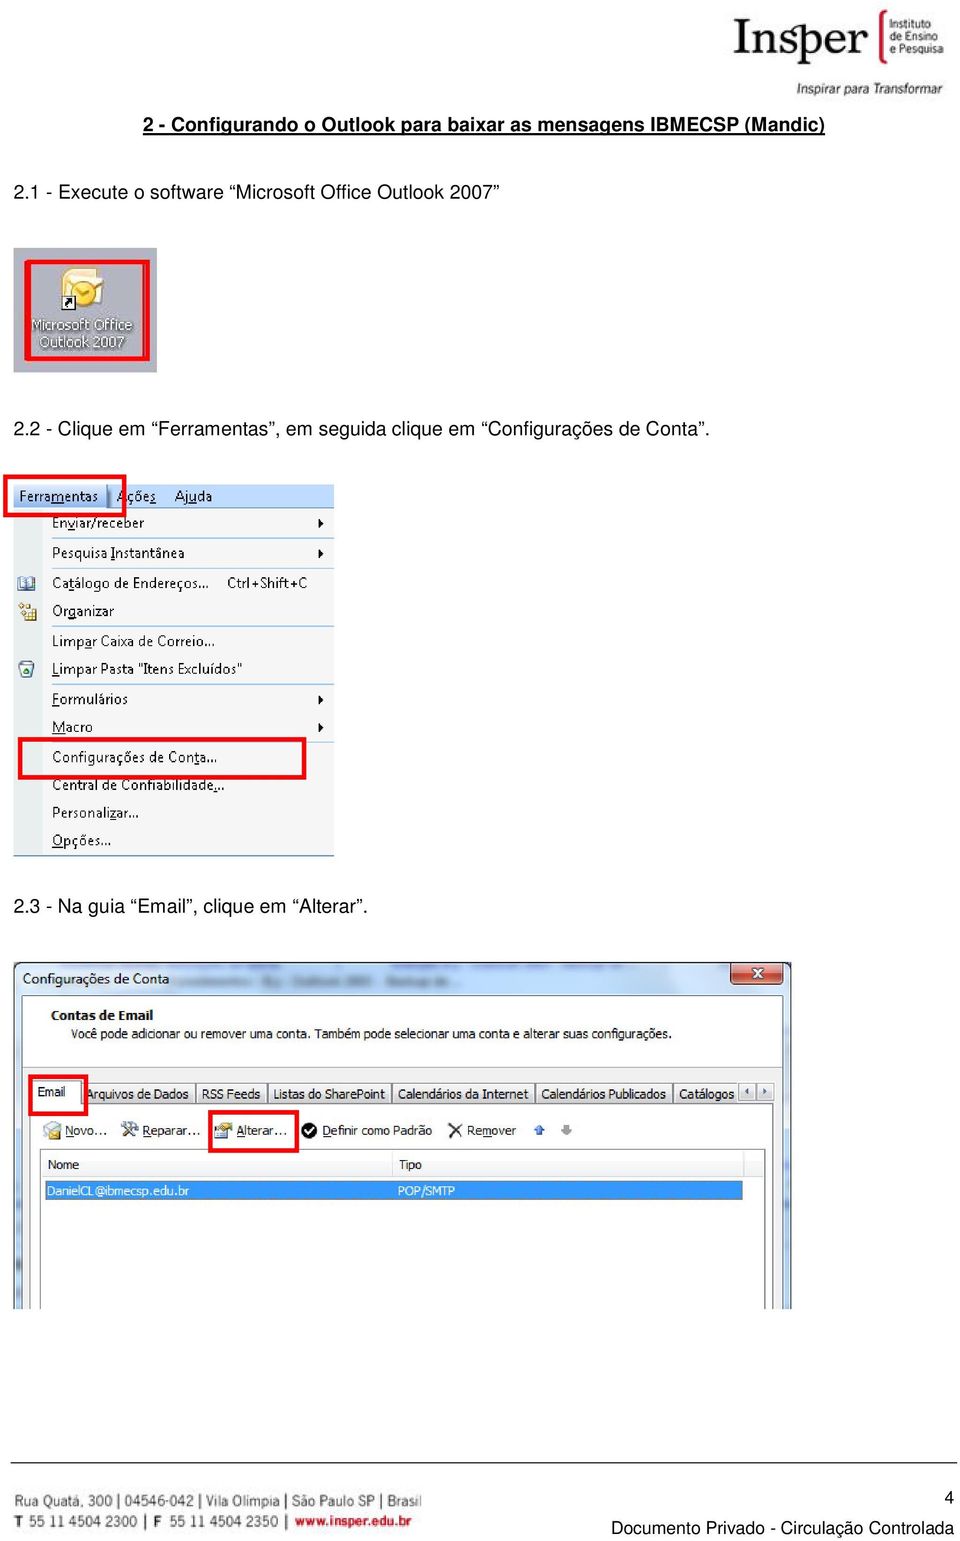 1 - Execute o software Microsoft Office Outlook 2007 2.